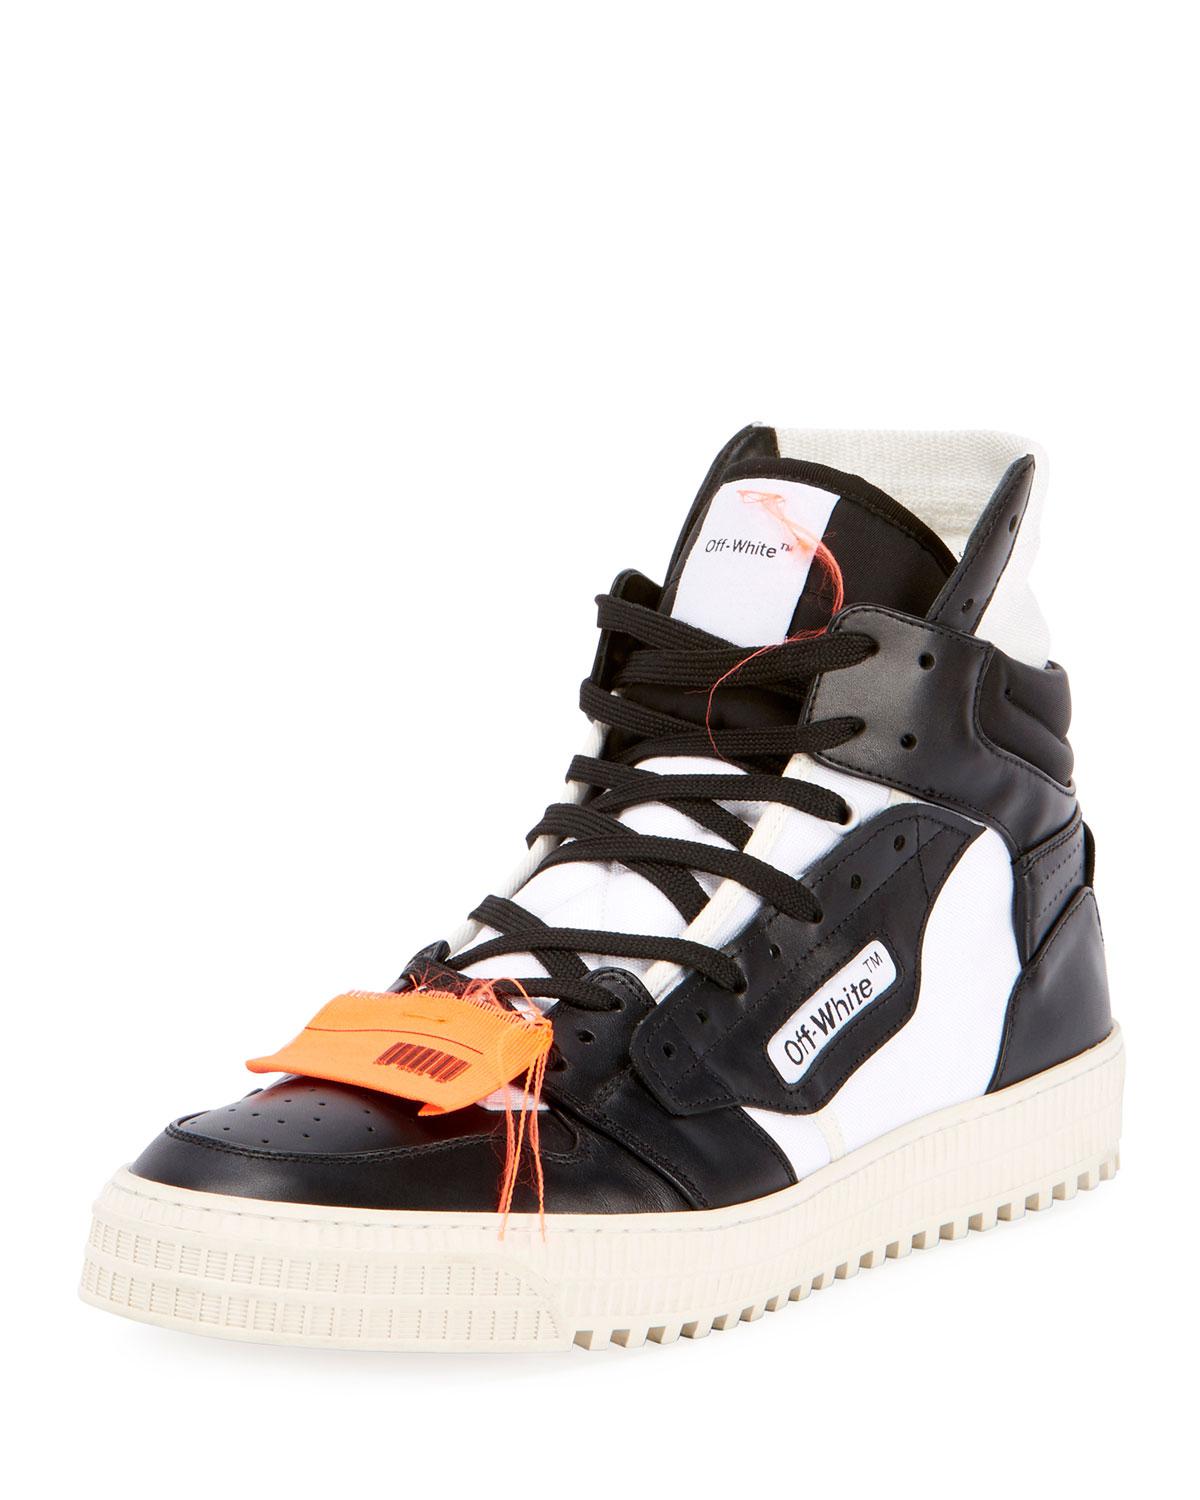 Lyst - Off-white c/o virgil abloh Low 3.0 High-top Sneaker in Black for Men